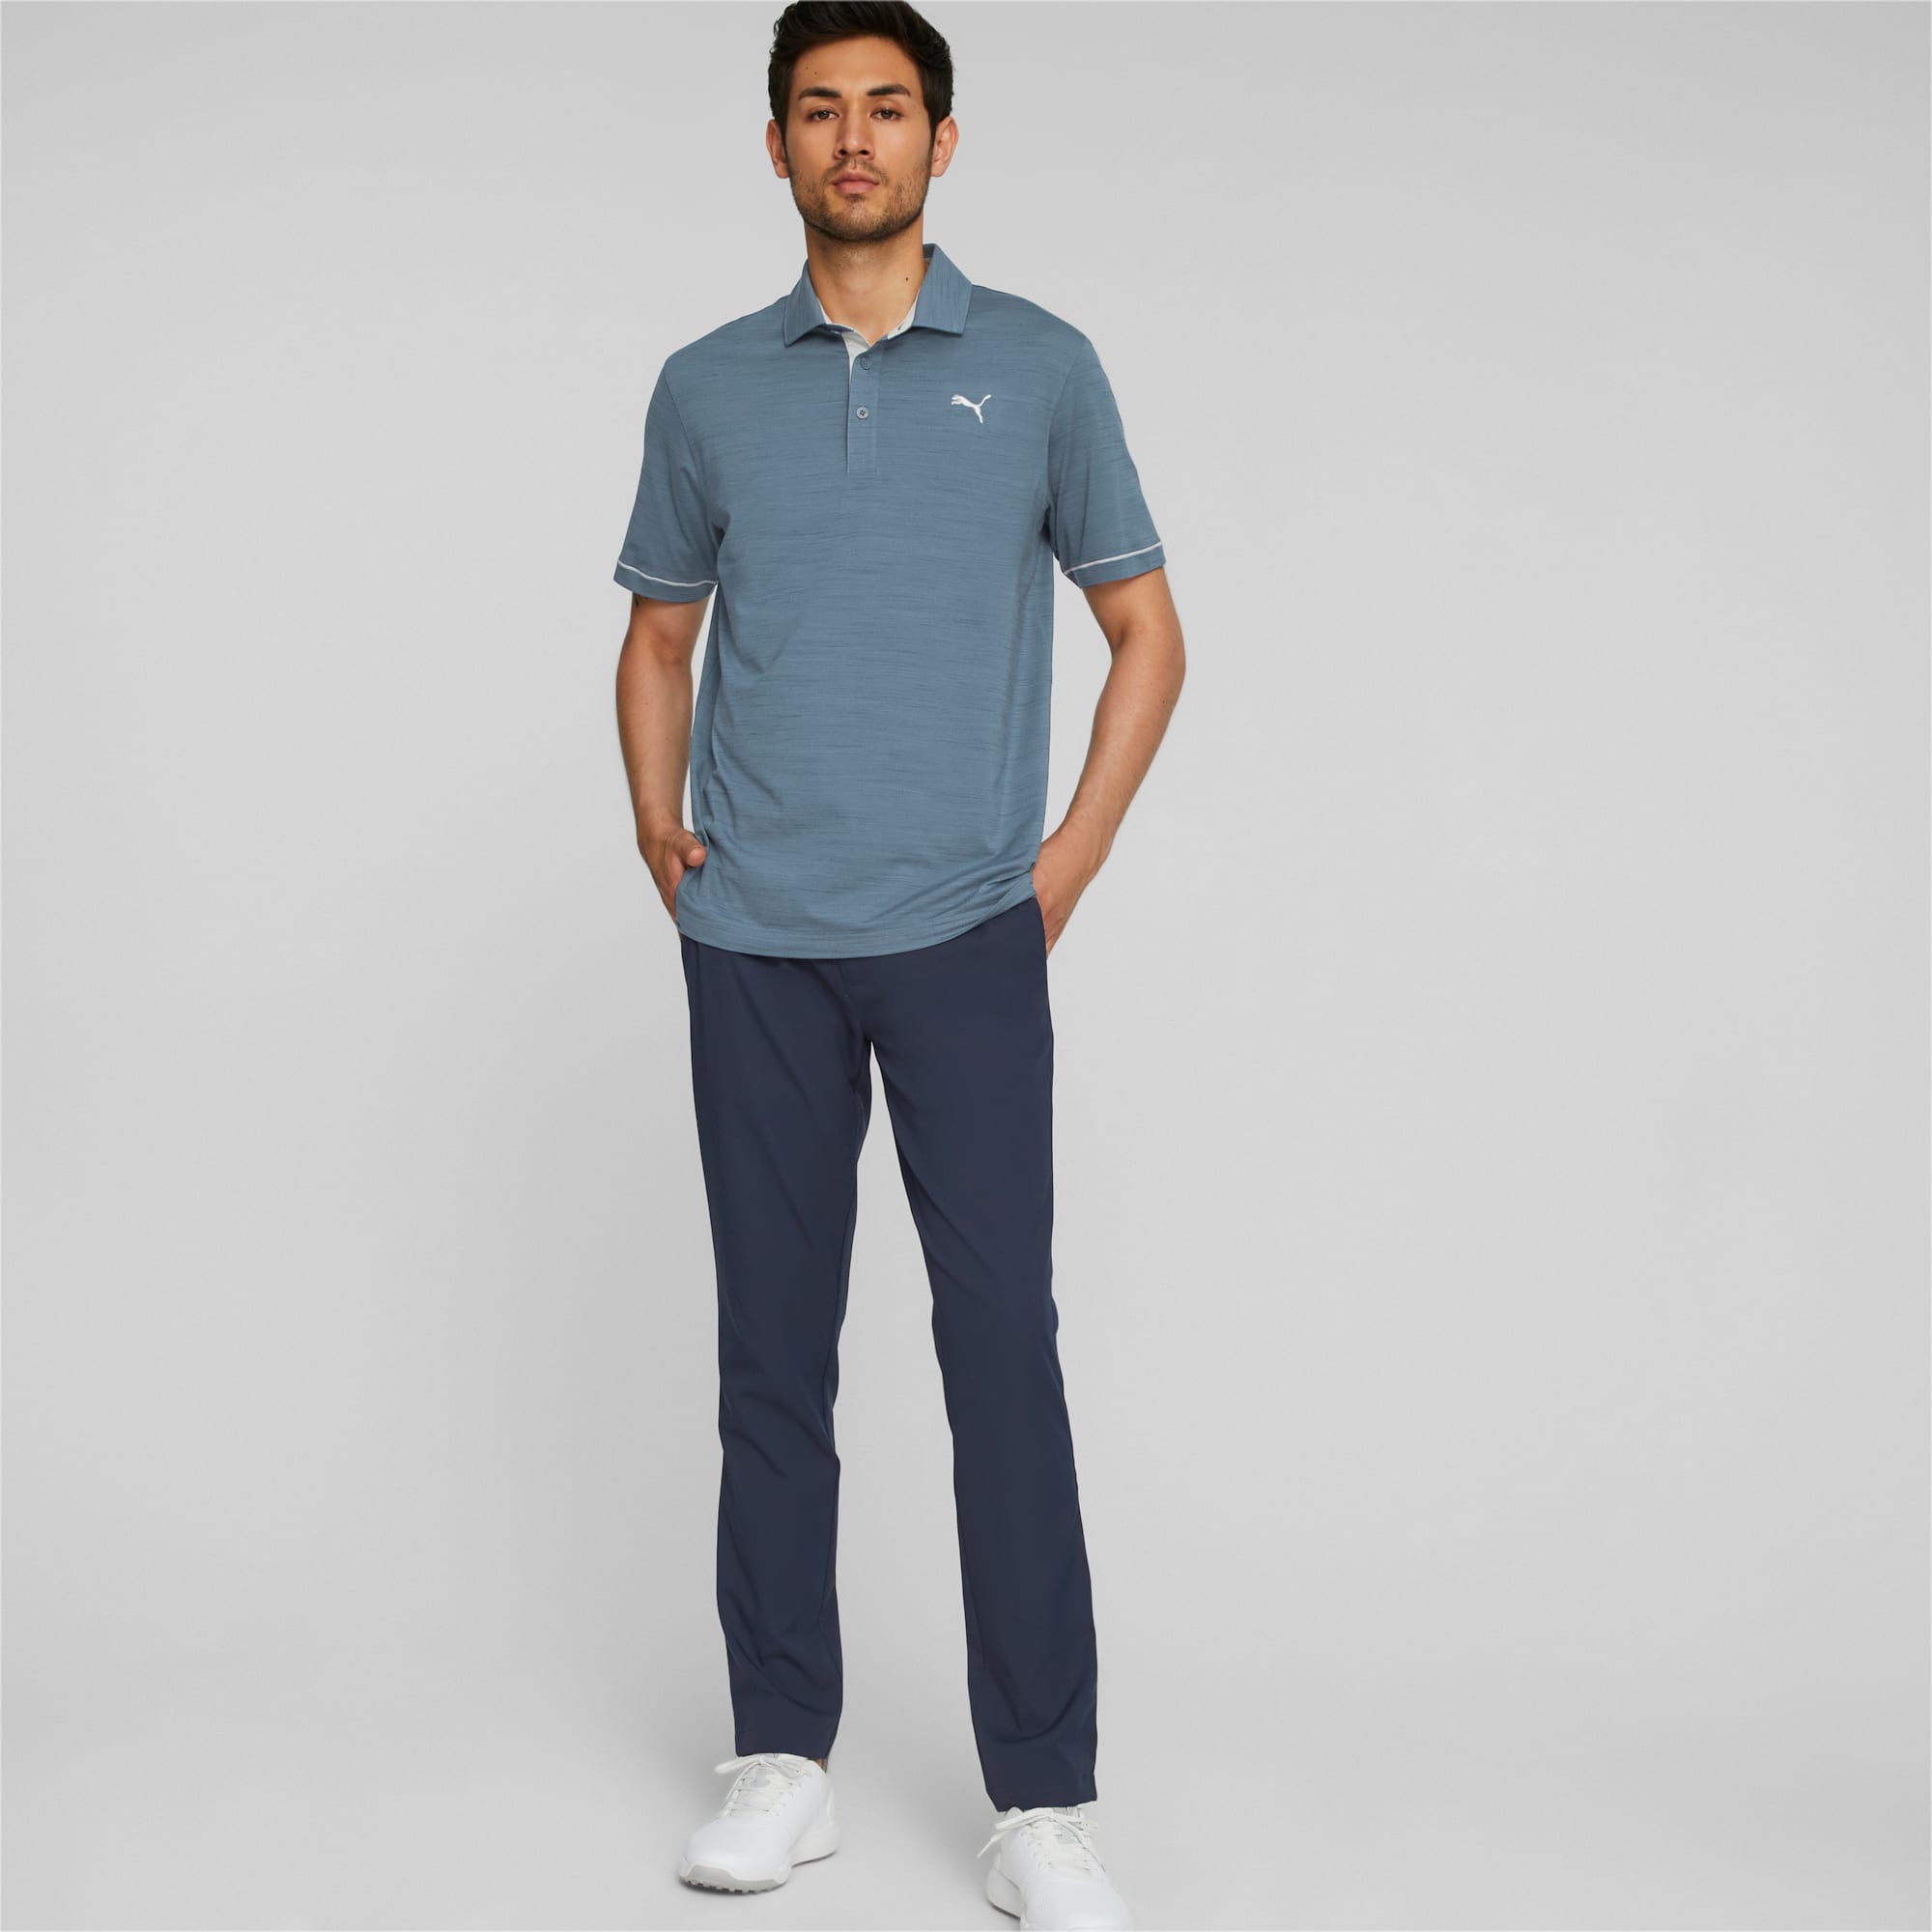 PUMA Dealer Tailored Golf Pants Men, Dark Blue, Size 34/36, Clothing